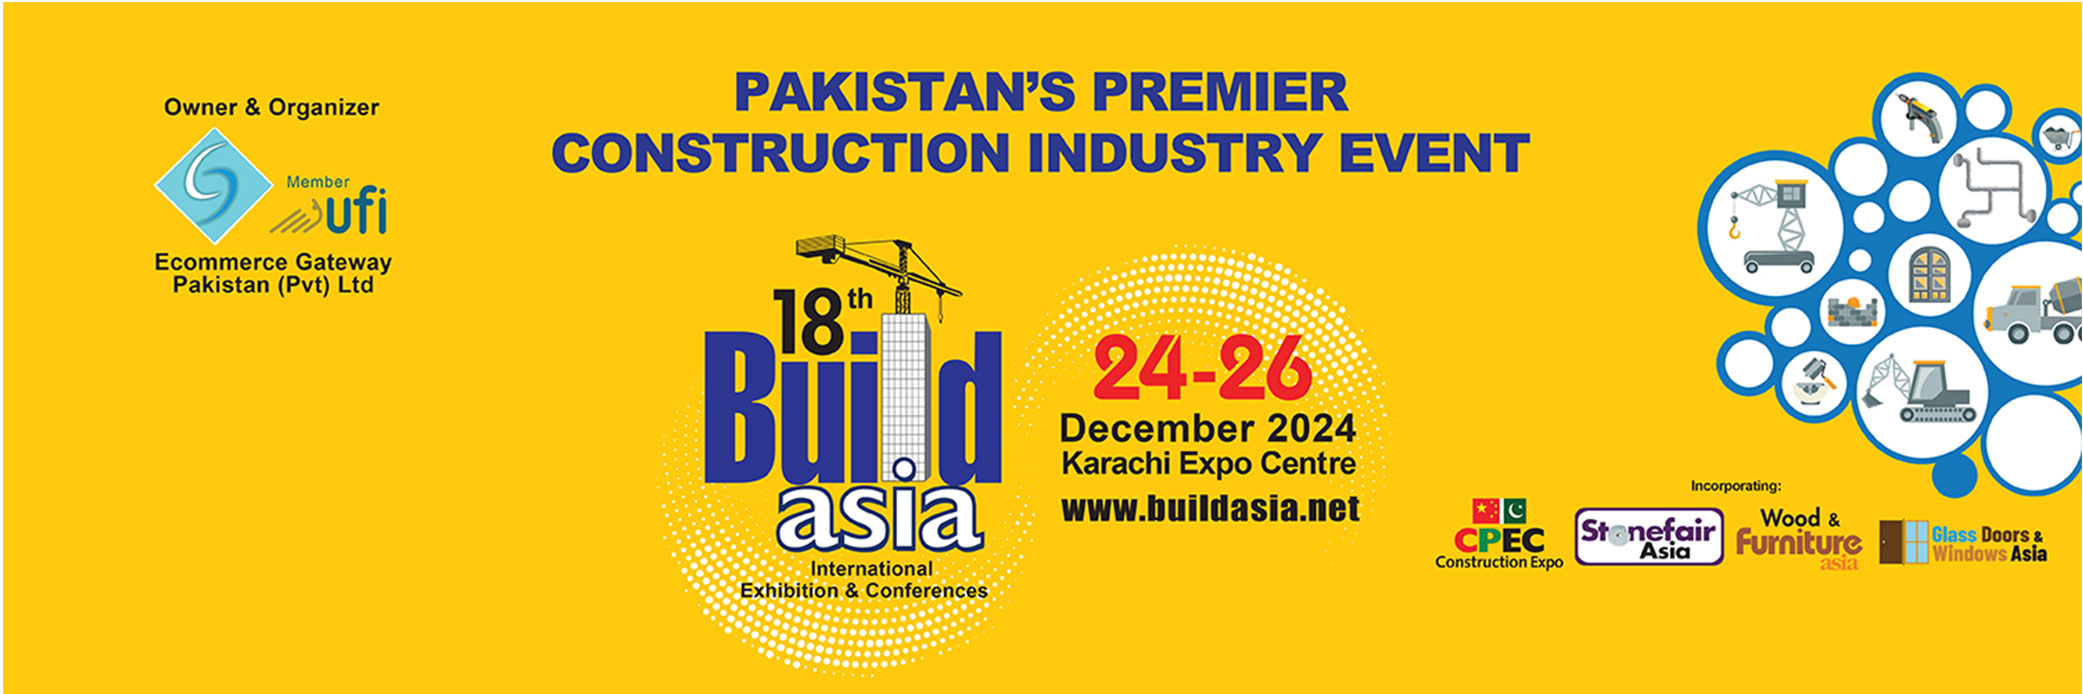 Construction Material Expo, Building Construction Exhibition